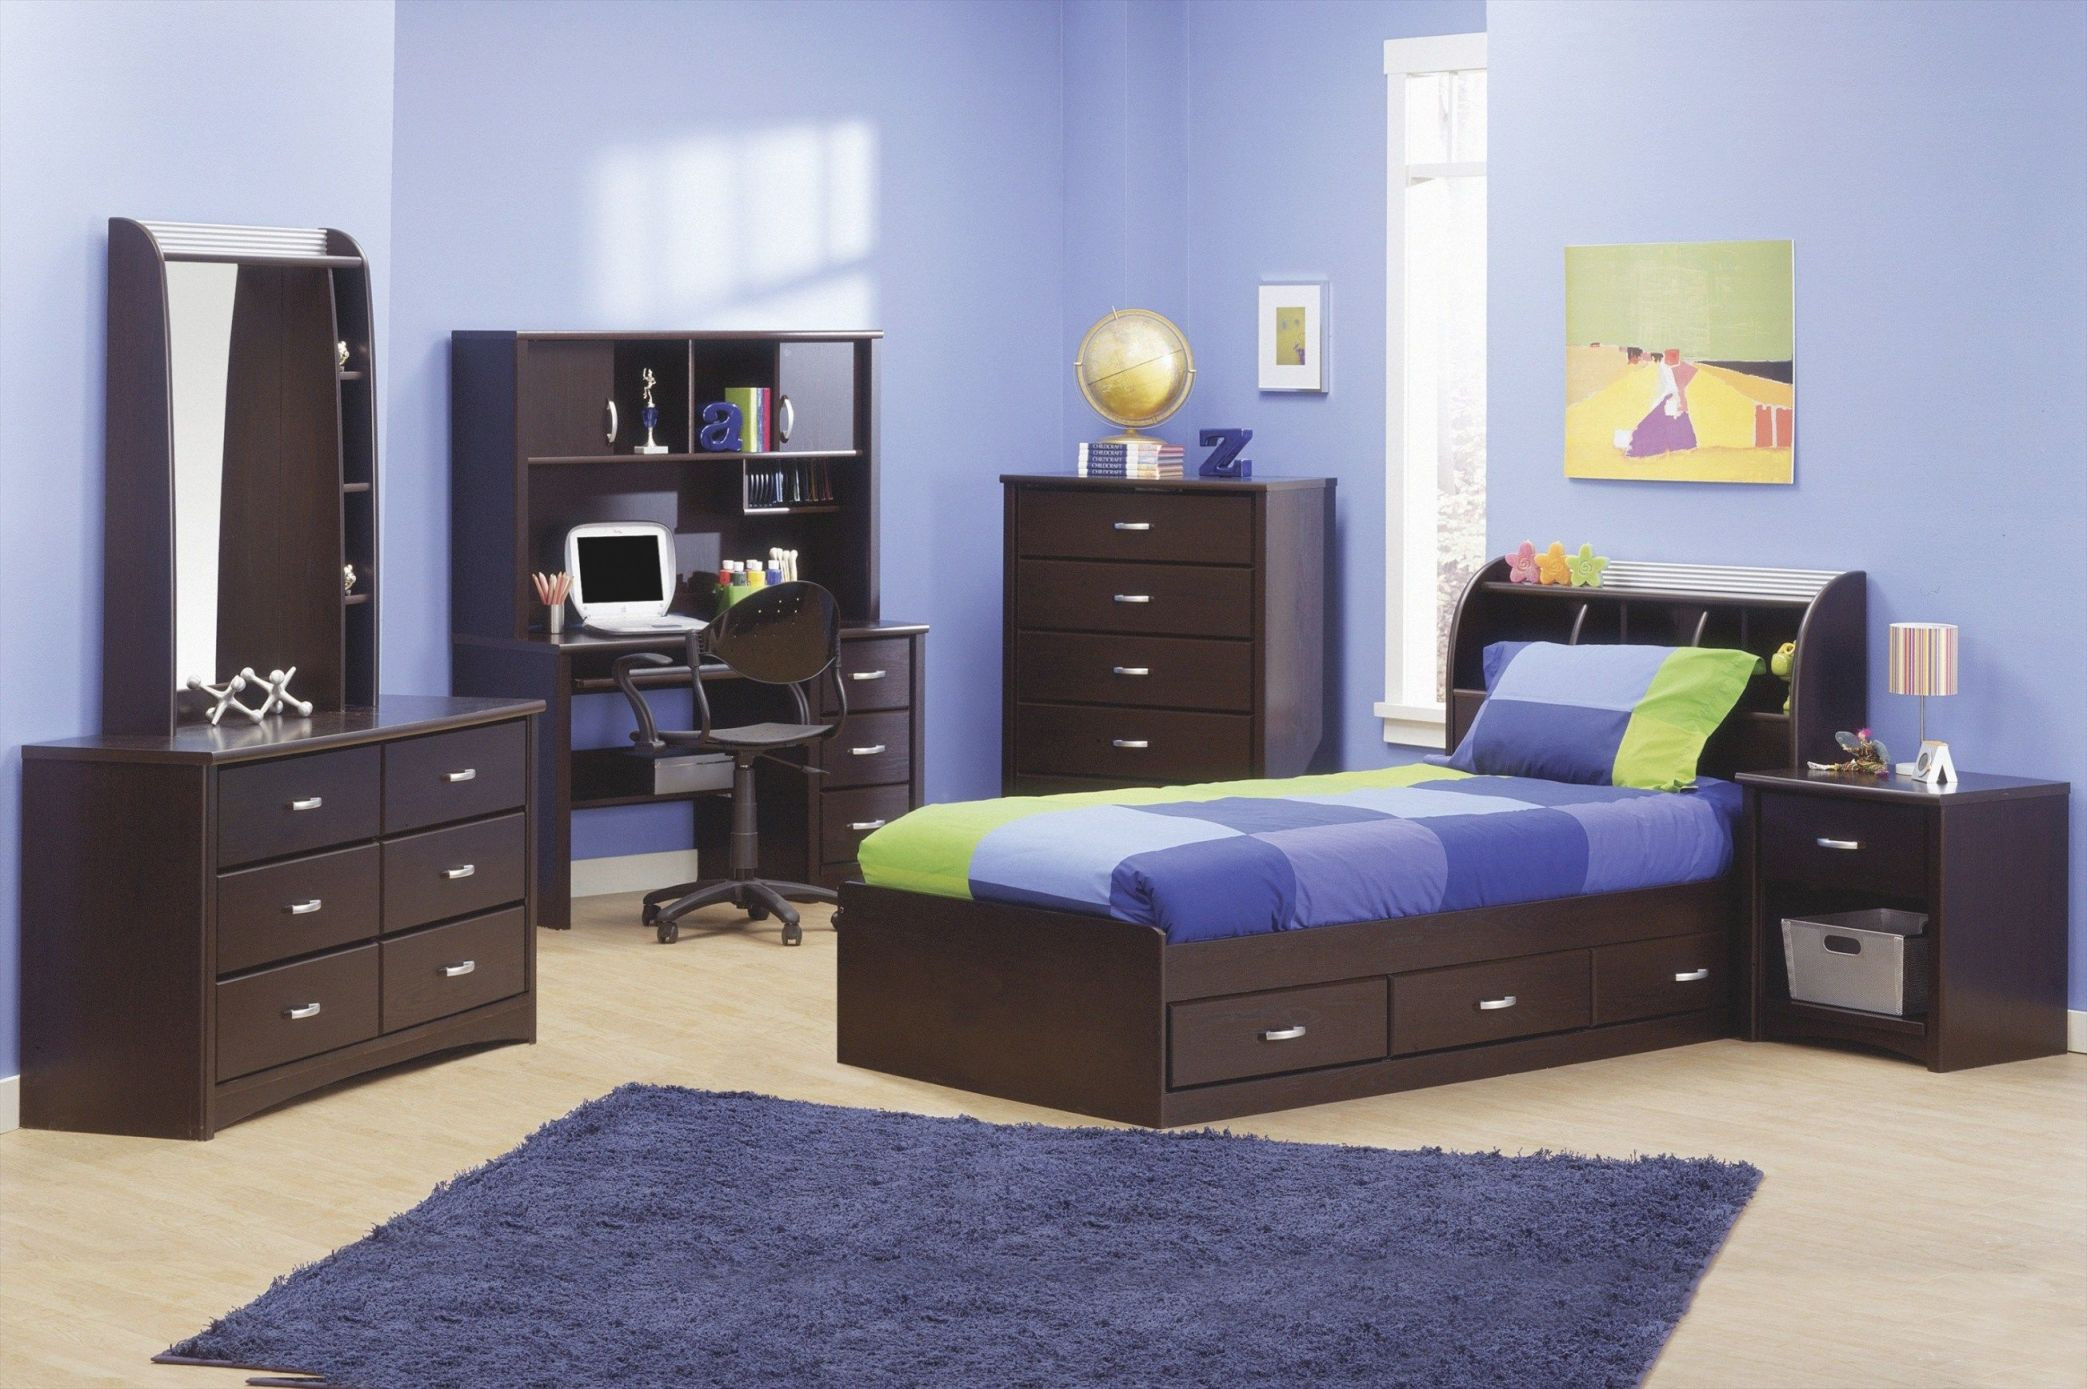 Bedroom Set For Boy
 Lovely Boys Bedroom Furniture Sets Awesome Decors